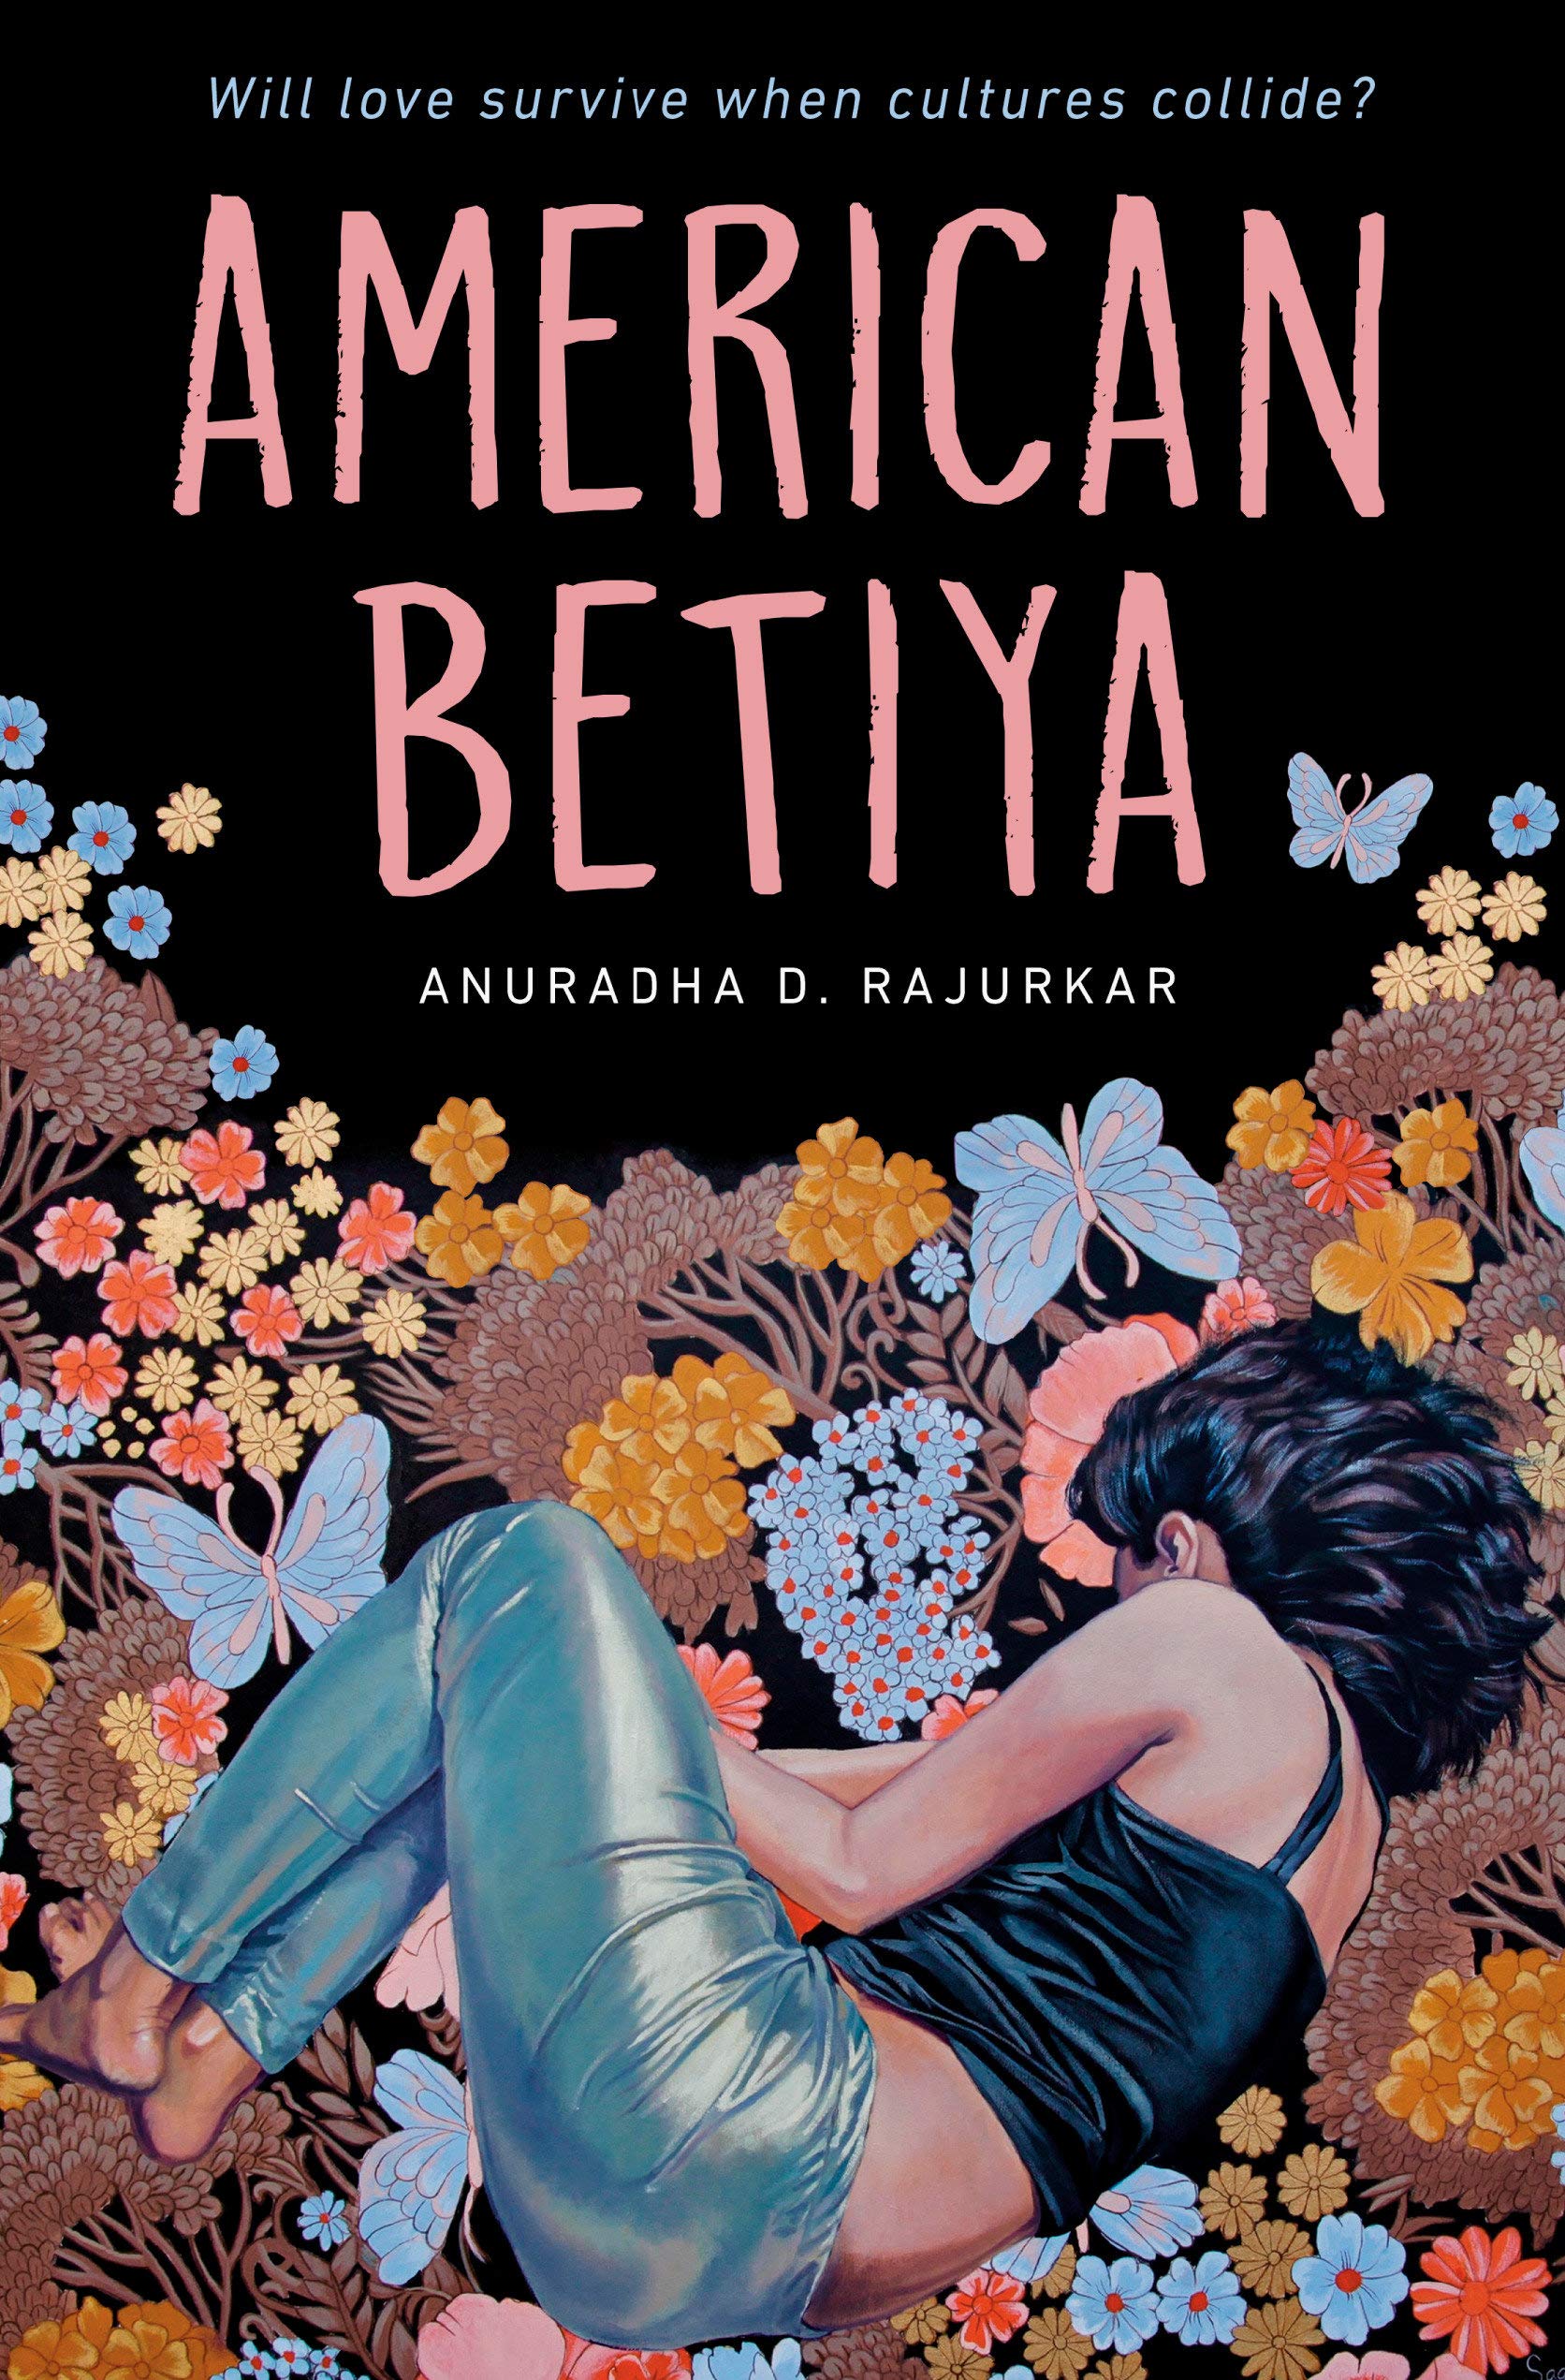 American Betiya By Anuradha D. Rajurkar Release Date? 2021 YA Contemporary Romance